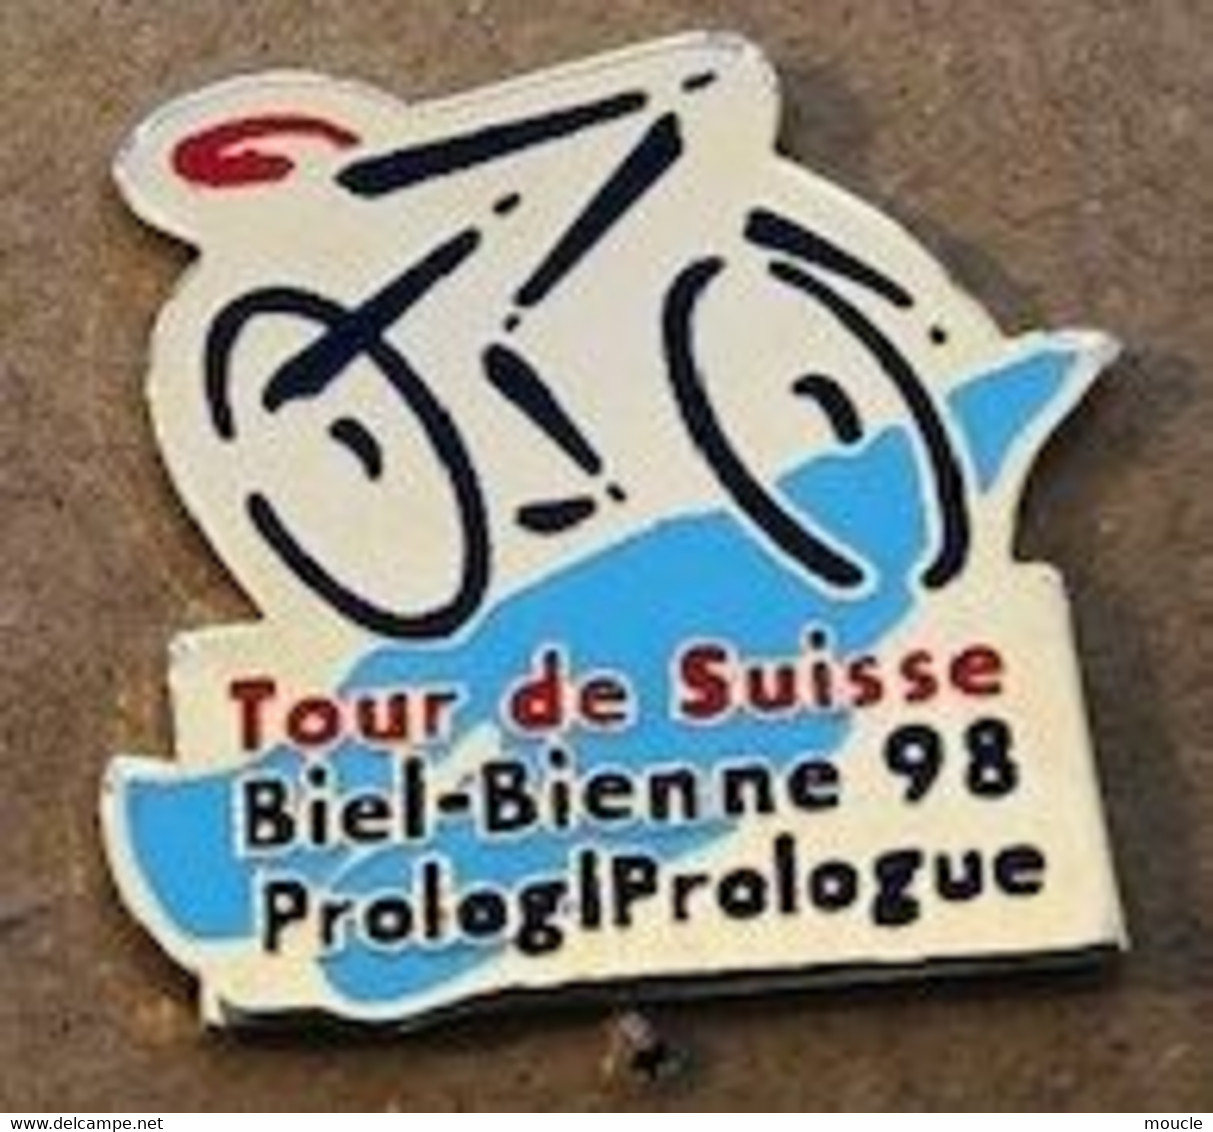 VELO - CYCLISME - CYCLISTE - TOUR DE SUISSE 1998 - BIENNE - BIEL - PROLOGUE - PROLOG - SCHWEIZ -  CYCLING - (20) - Wielrennen